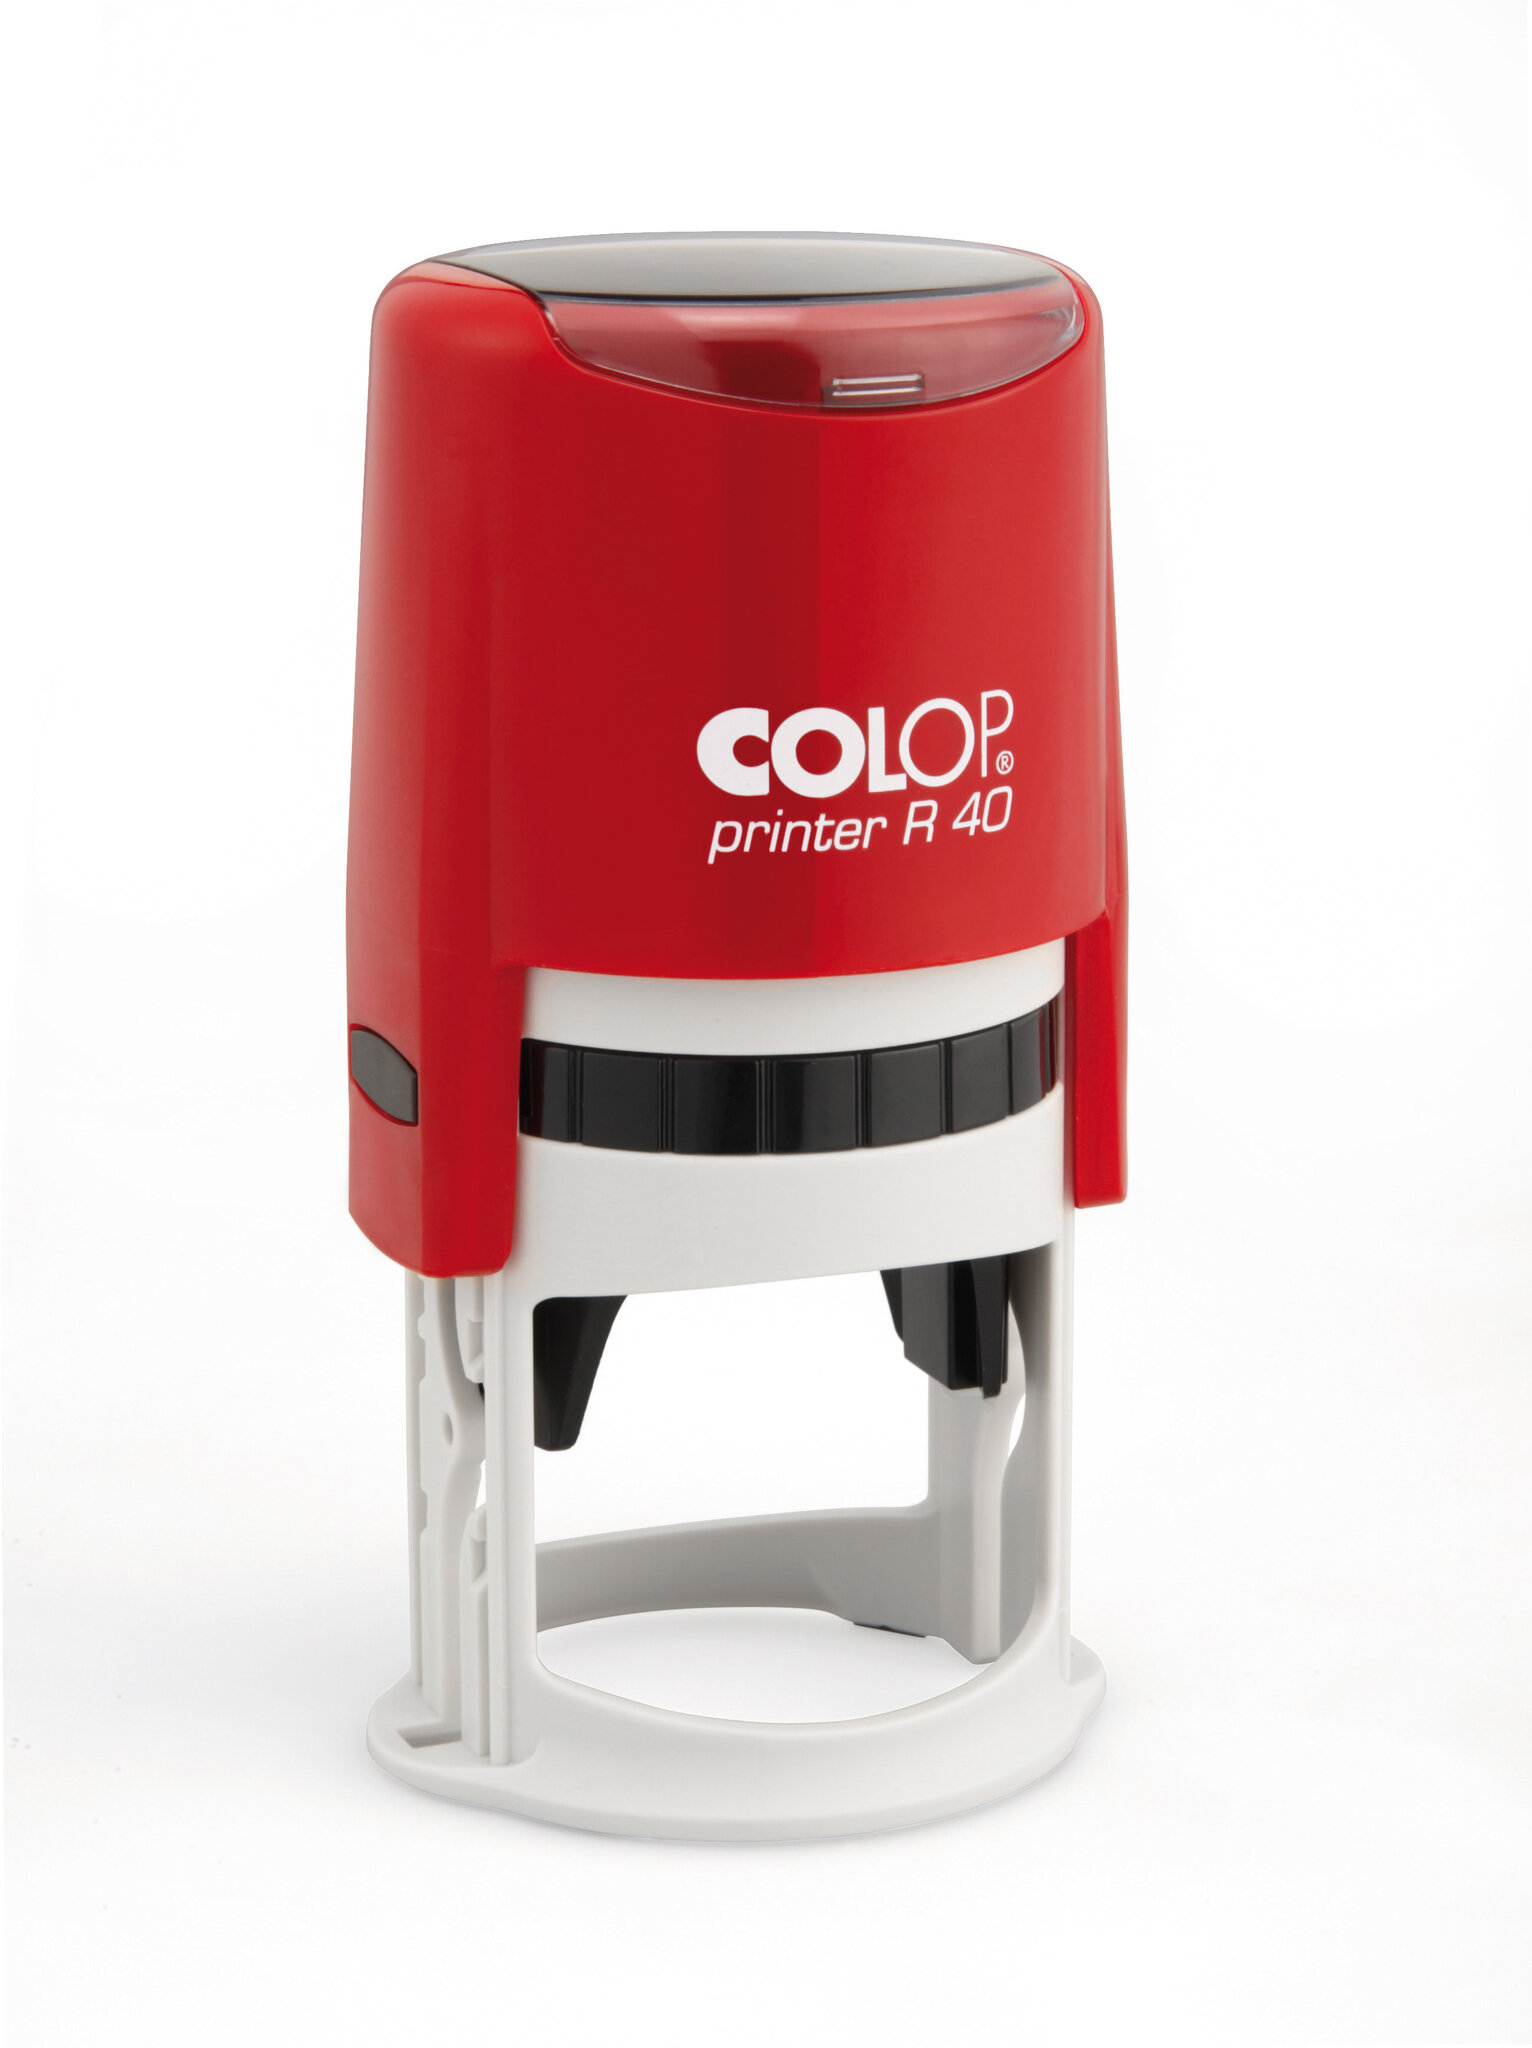 Colop Printer R40 автоматическая оснастка для печати диаметр 41.5мм (красная)